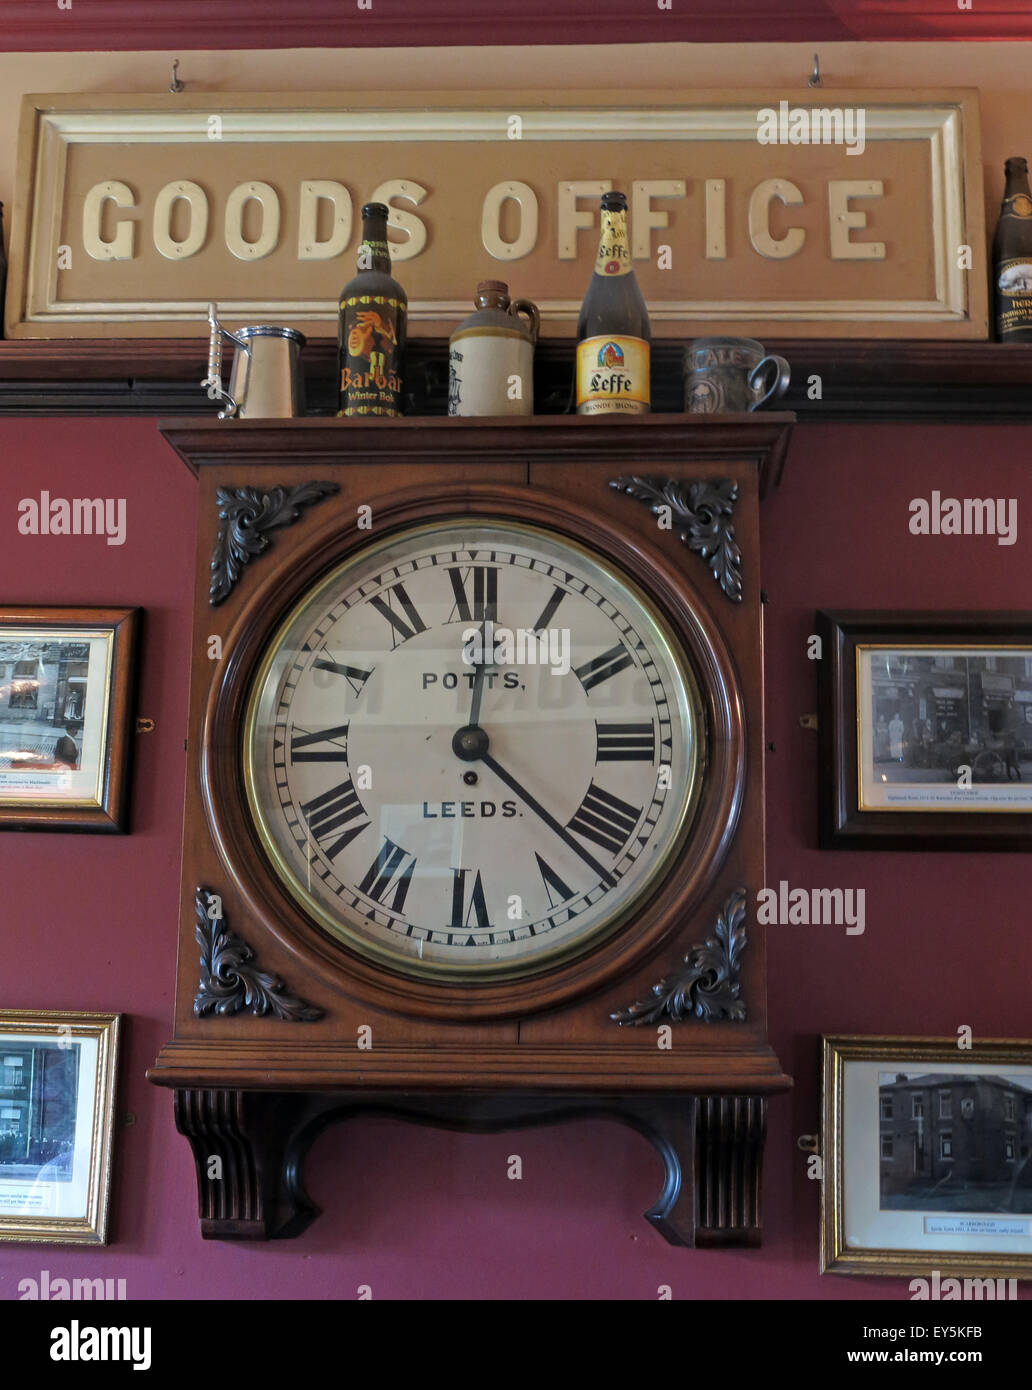 West Riding Pub, Dewsbury Railway Station, West Yorkshire, England, UK - Goods Office Clock Stock Photo